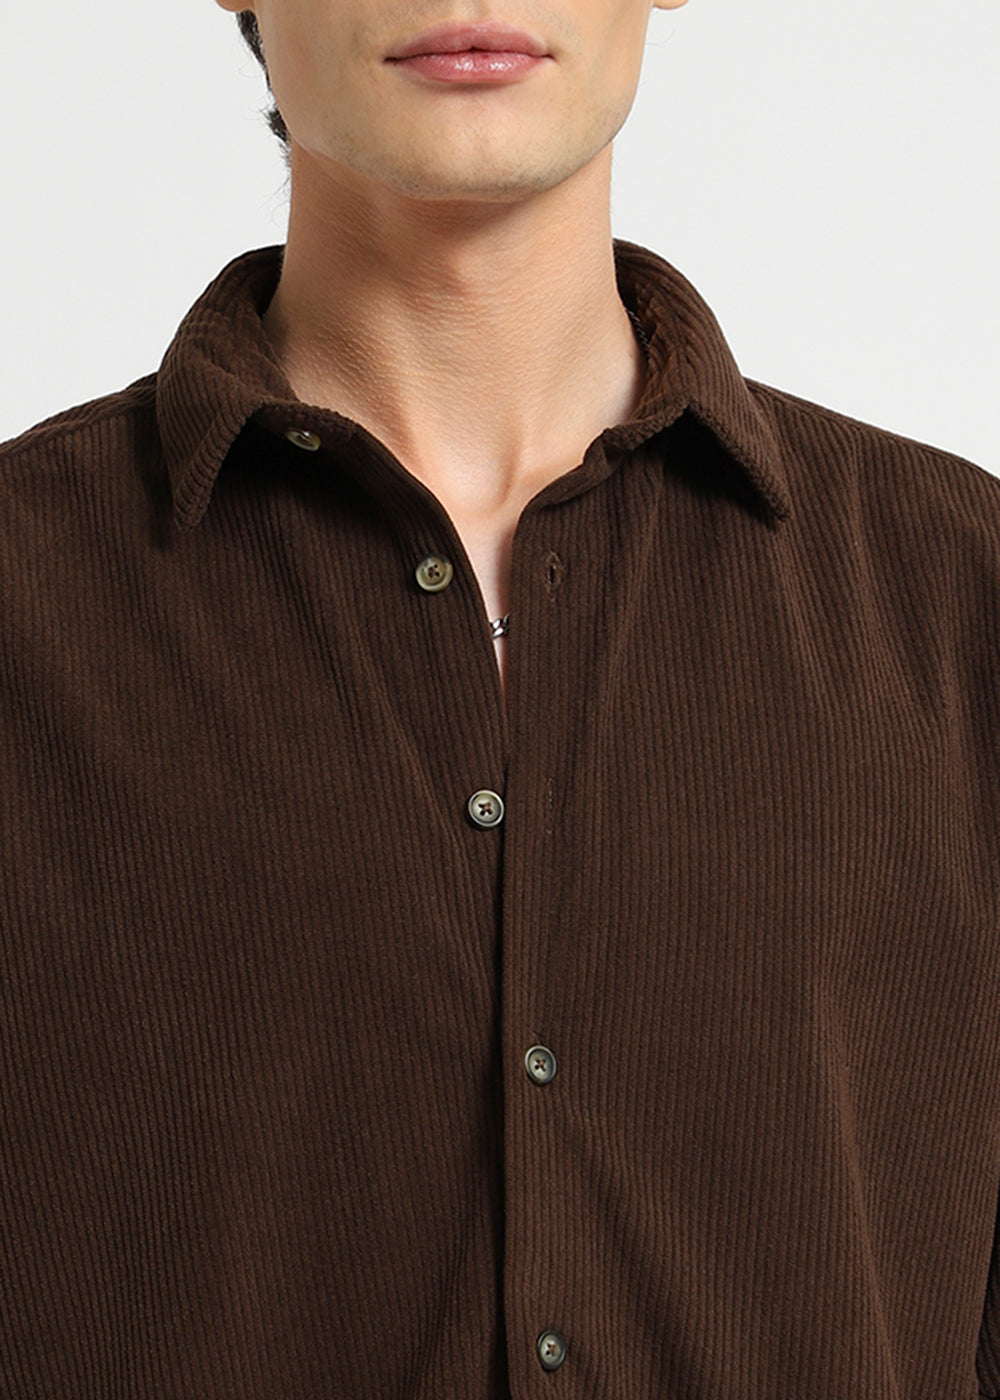 Mulch Brown Corduroy Shirt